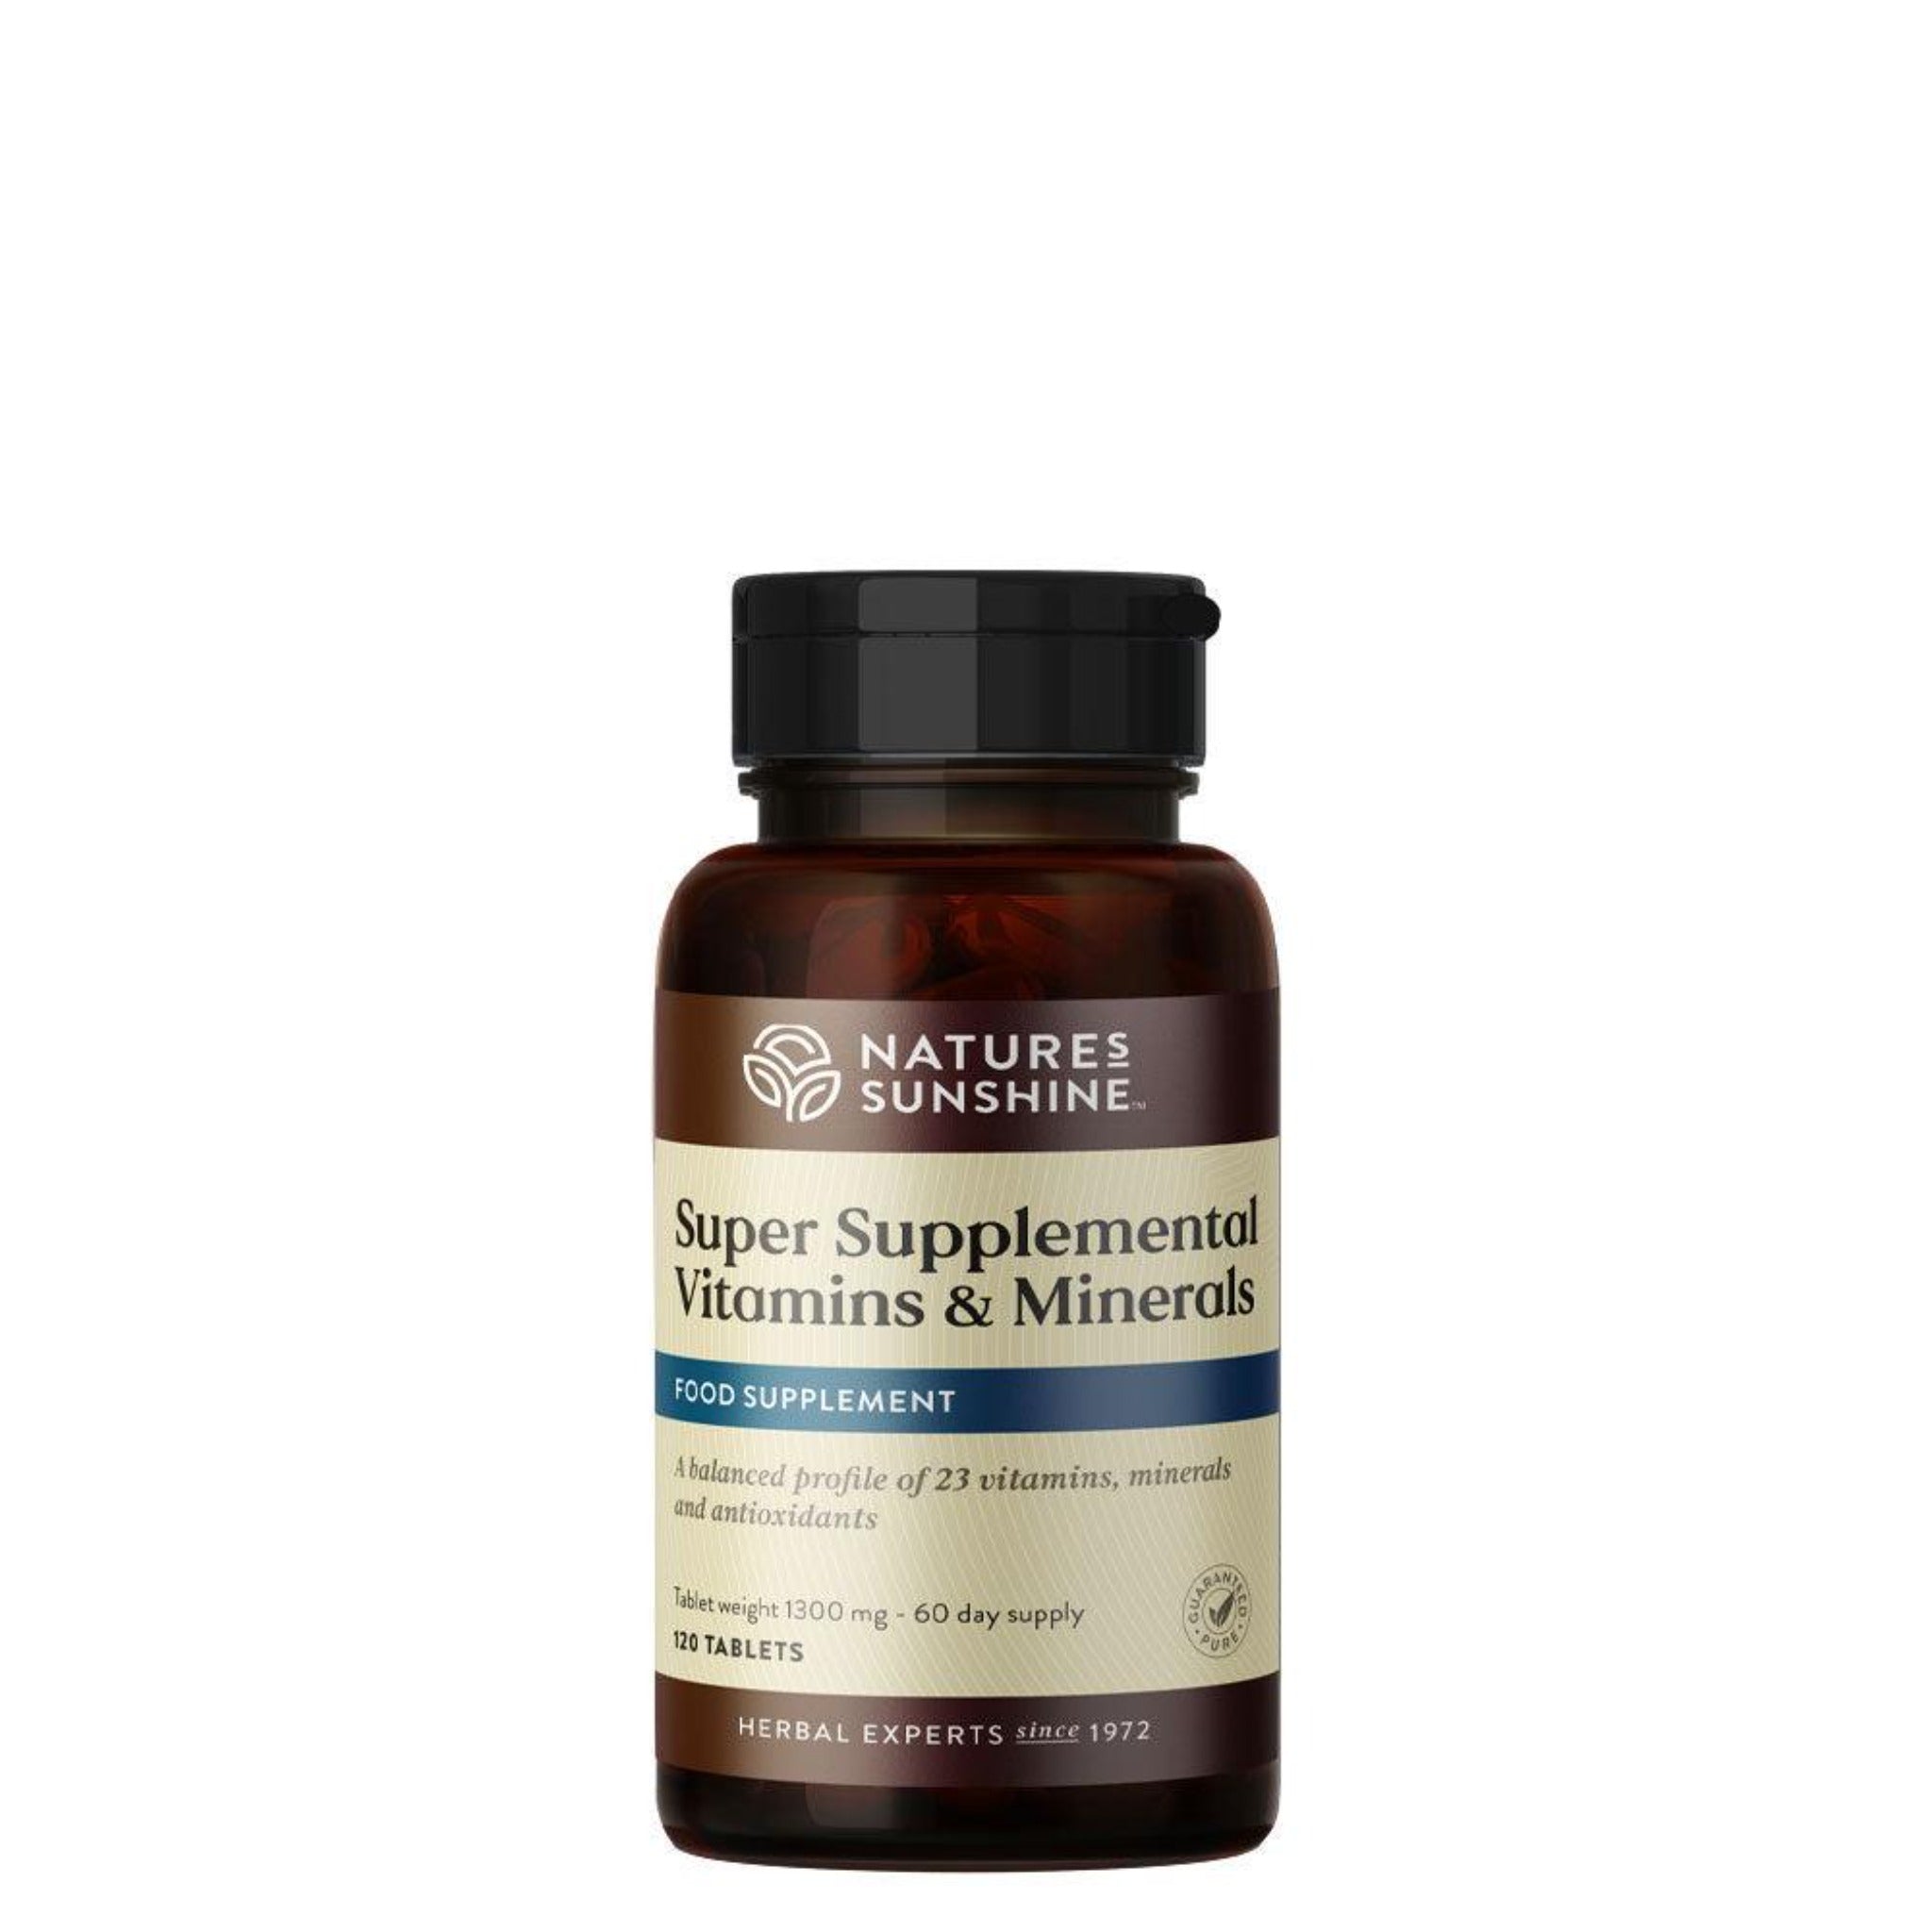 Super Supplemental Vitamins and Minerals Super Supplemental